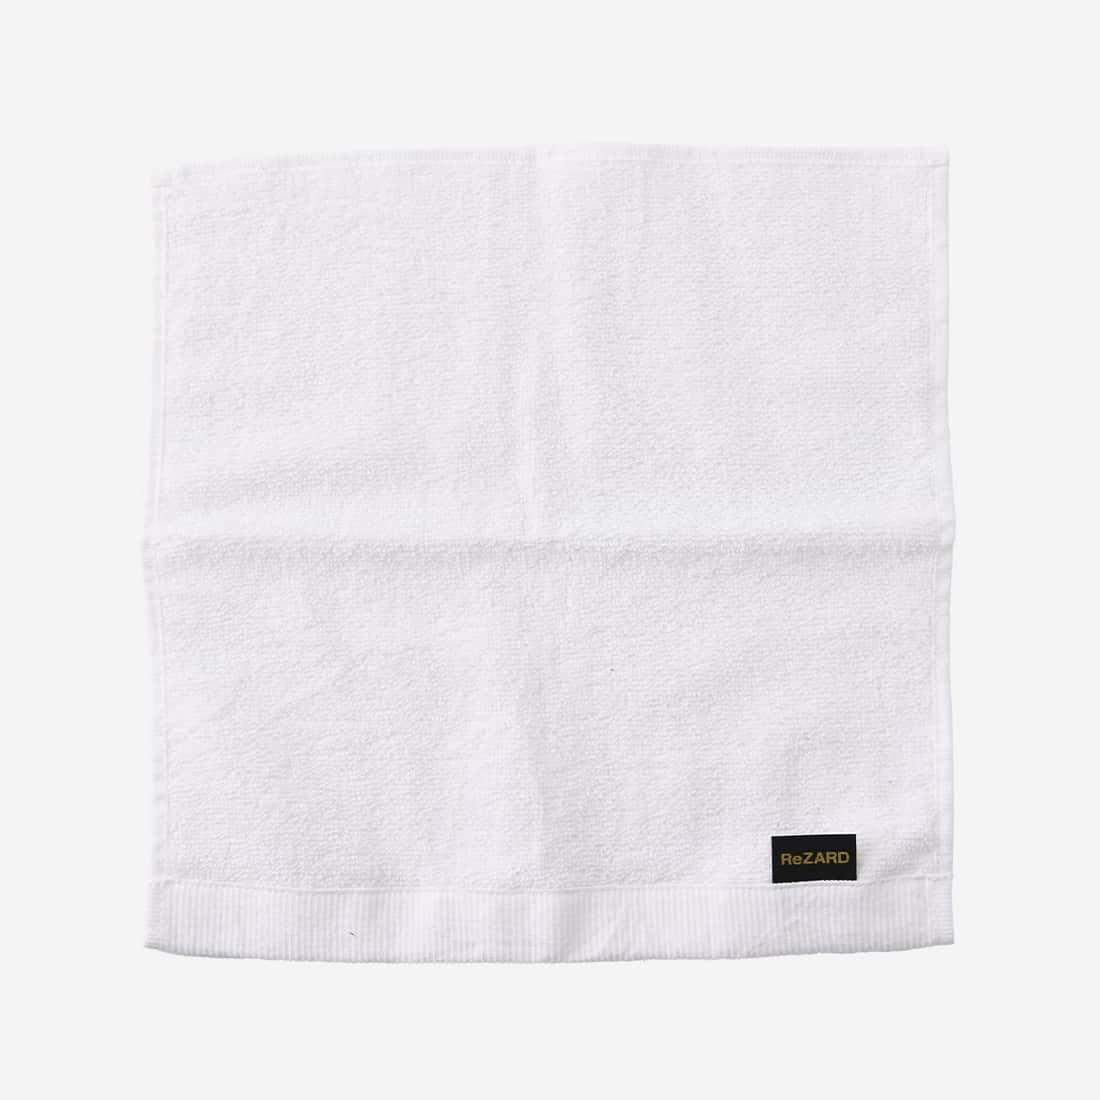 【ReZARD】Towel Handkerchief(WHITE)